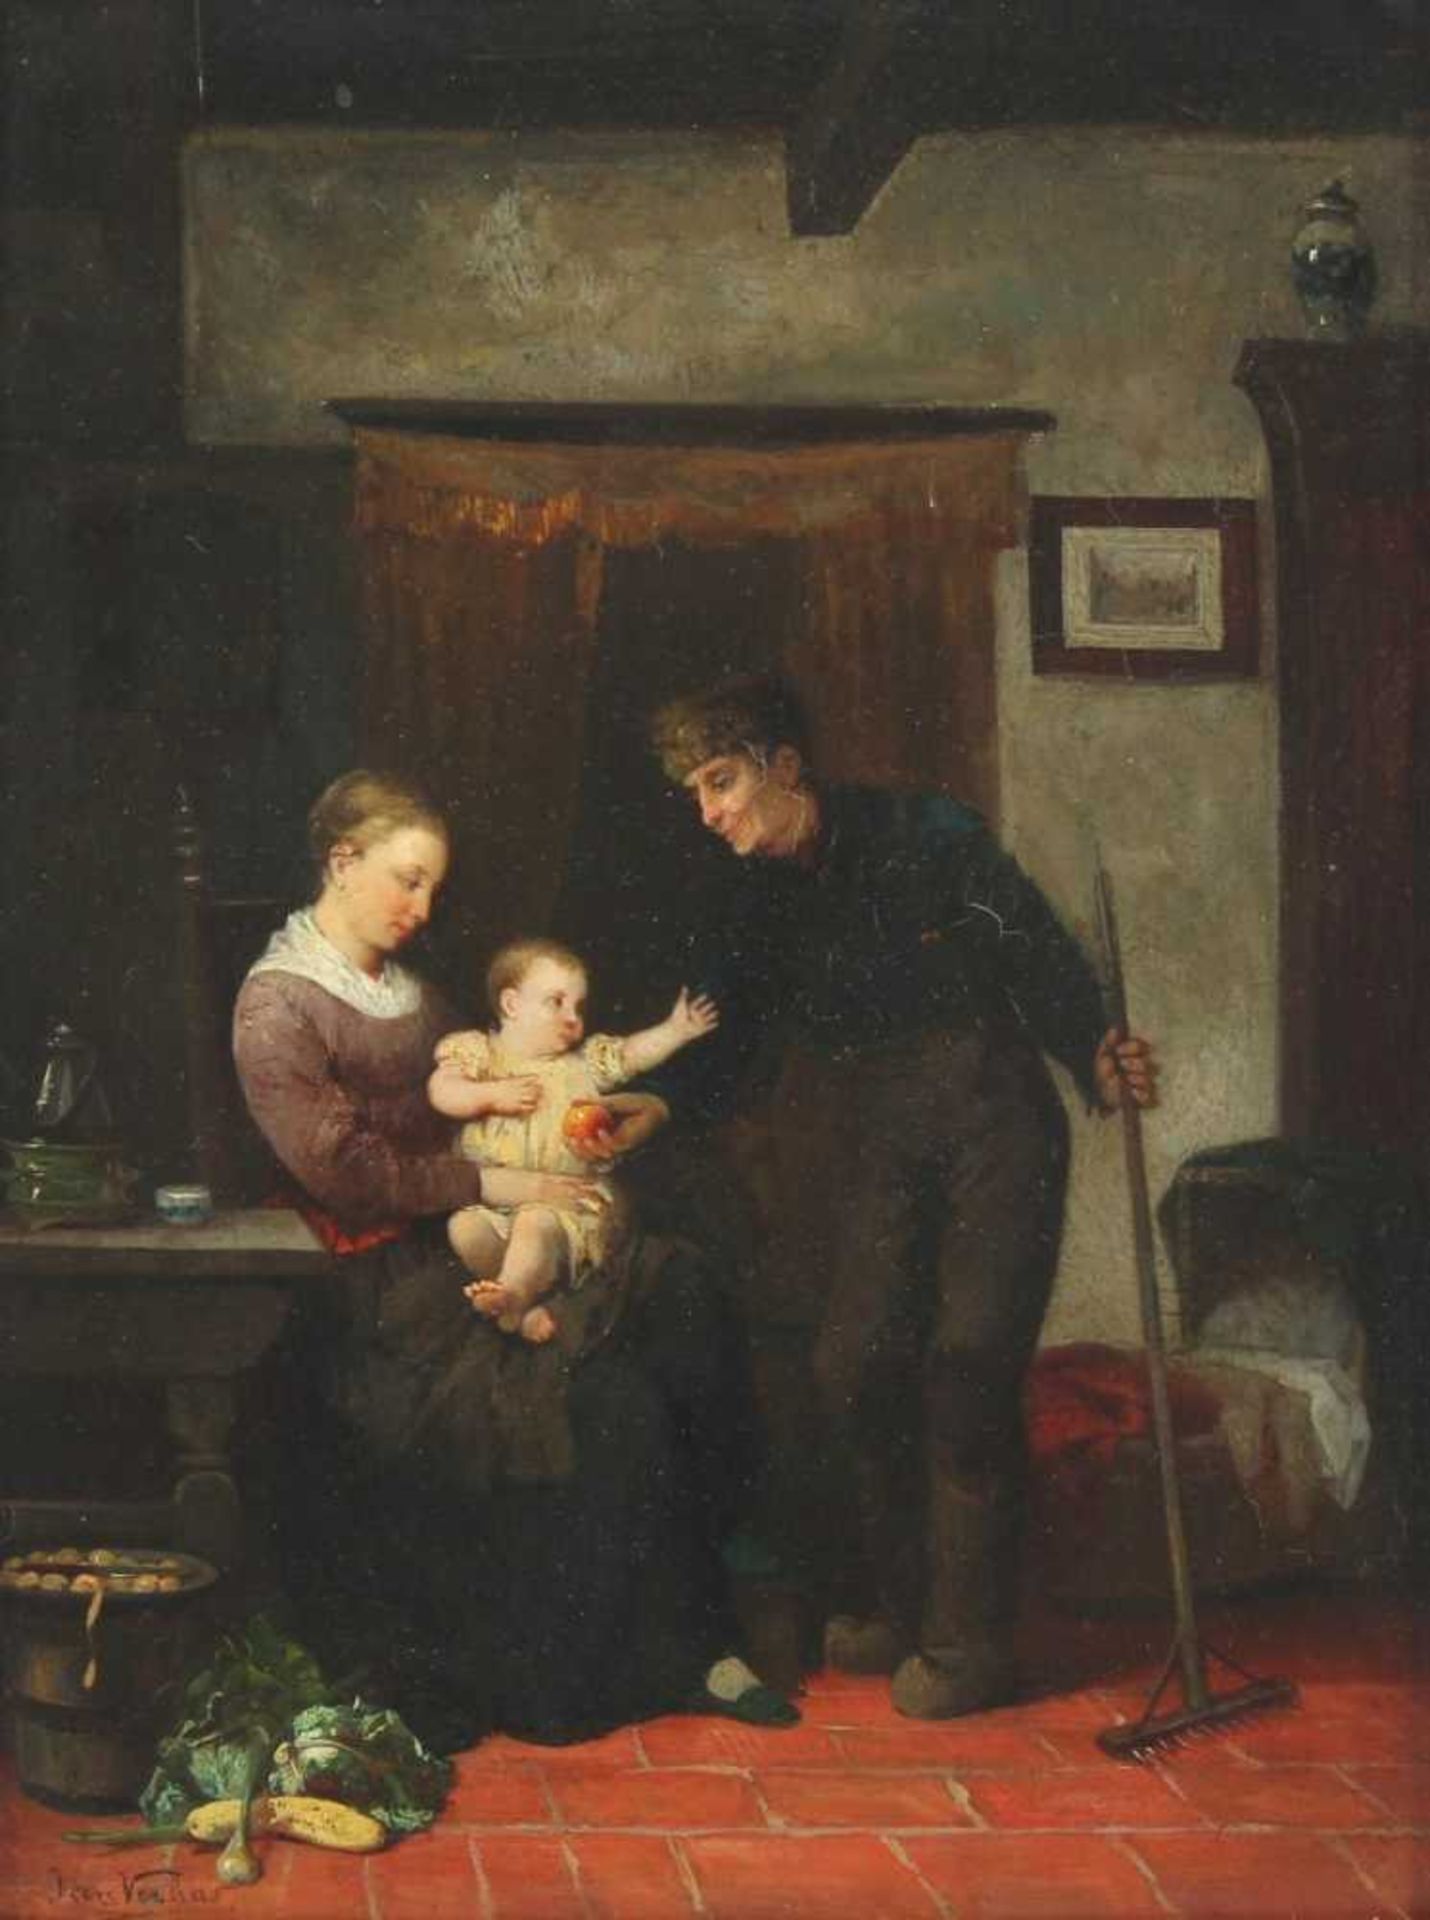 VERHAS, Jan (1834-1896), "Interieur mit Familie", Öl/Holz, 26 x 21, unten links signiert, R.